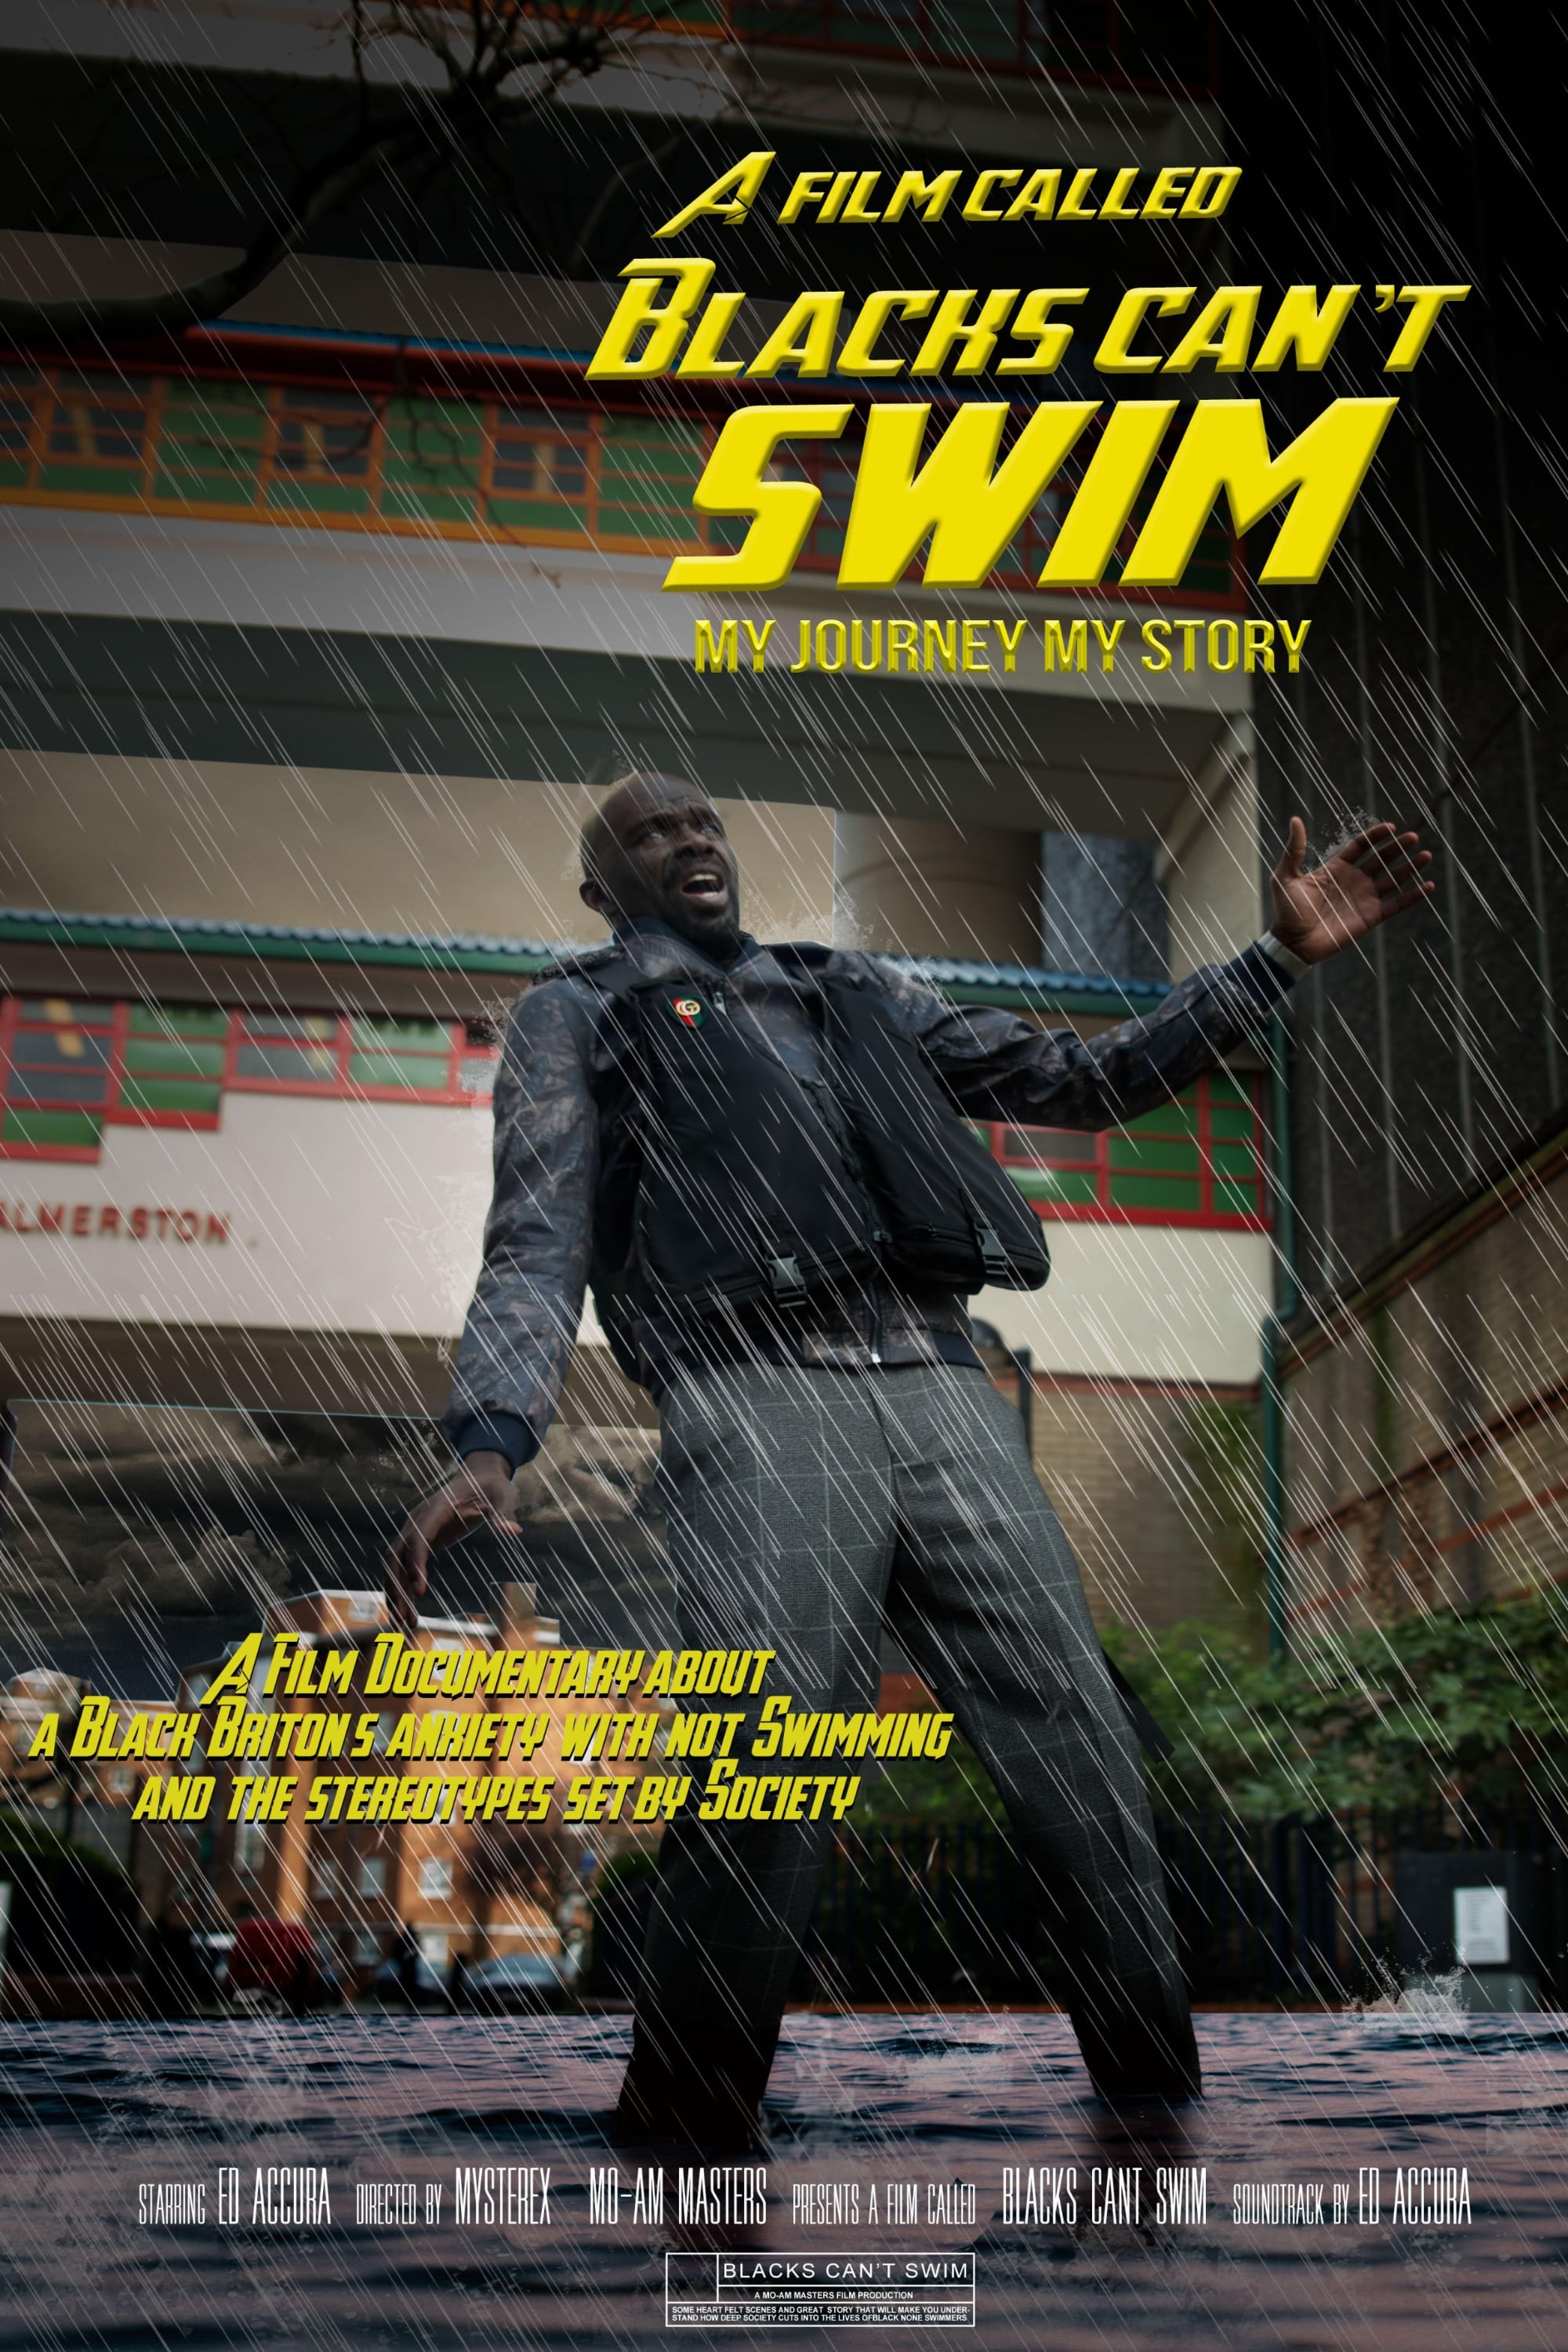 A Film Called Blacks Can't Swim (My Journey My Story)